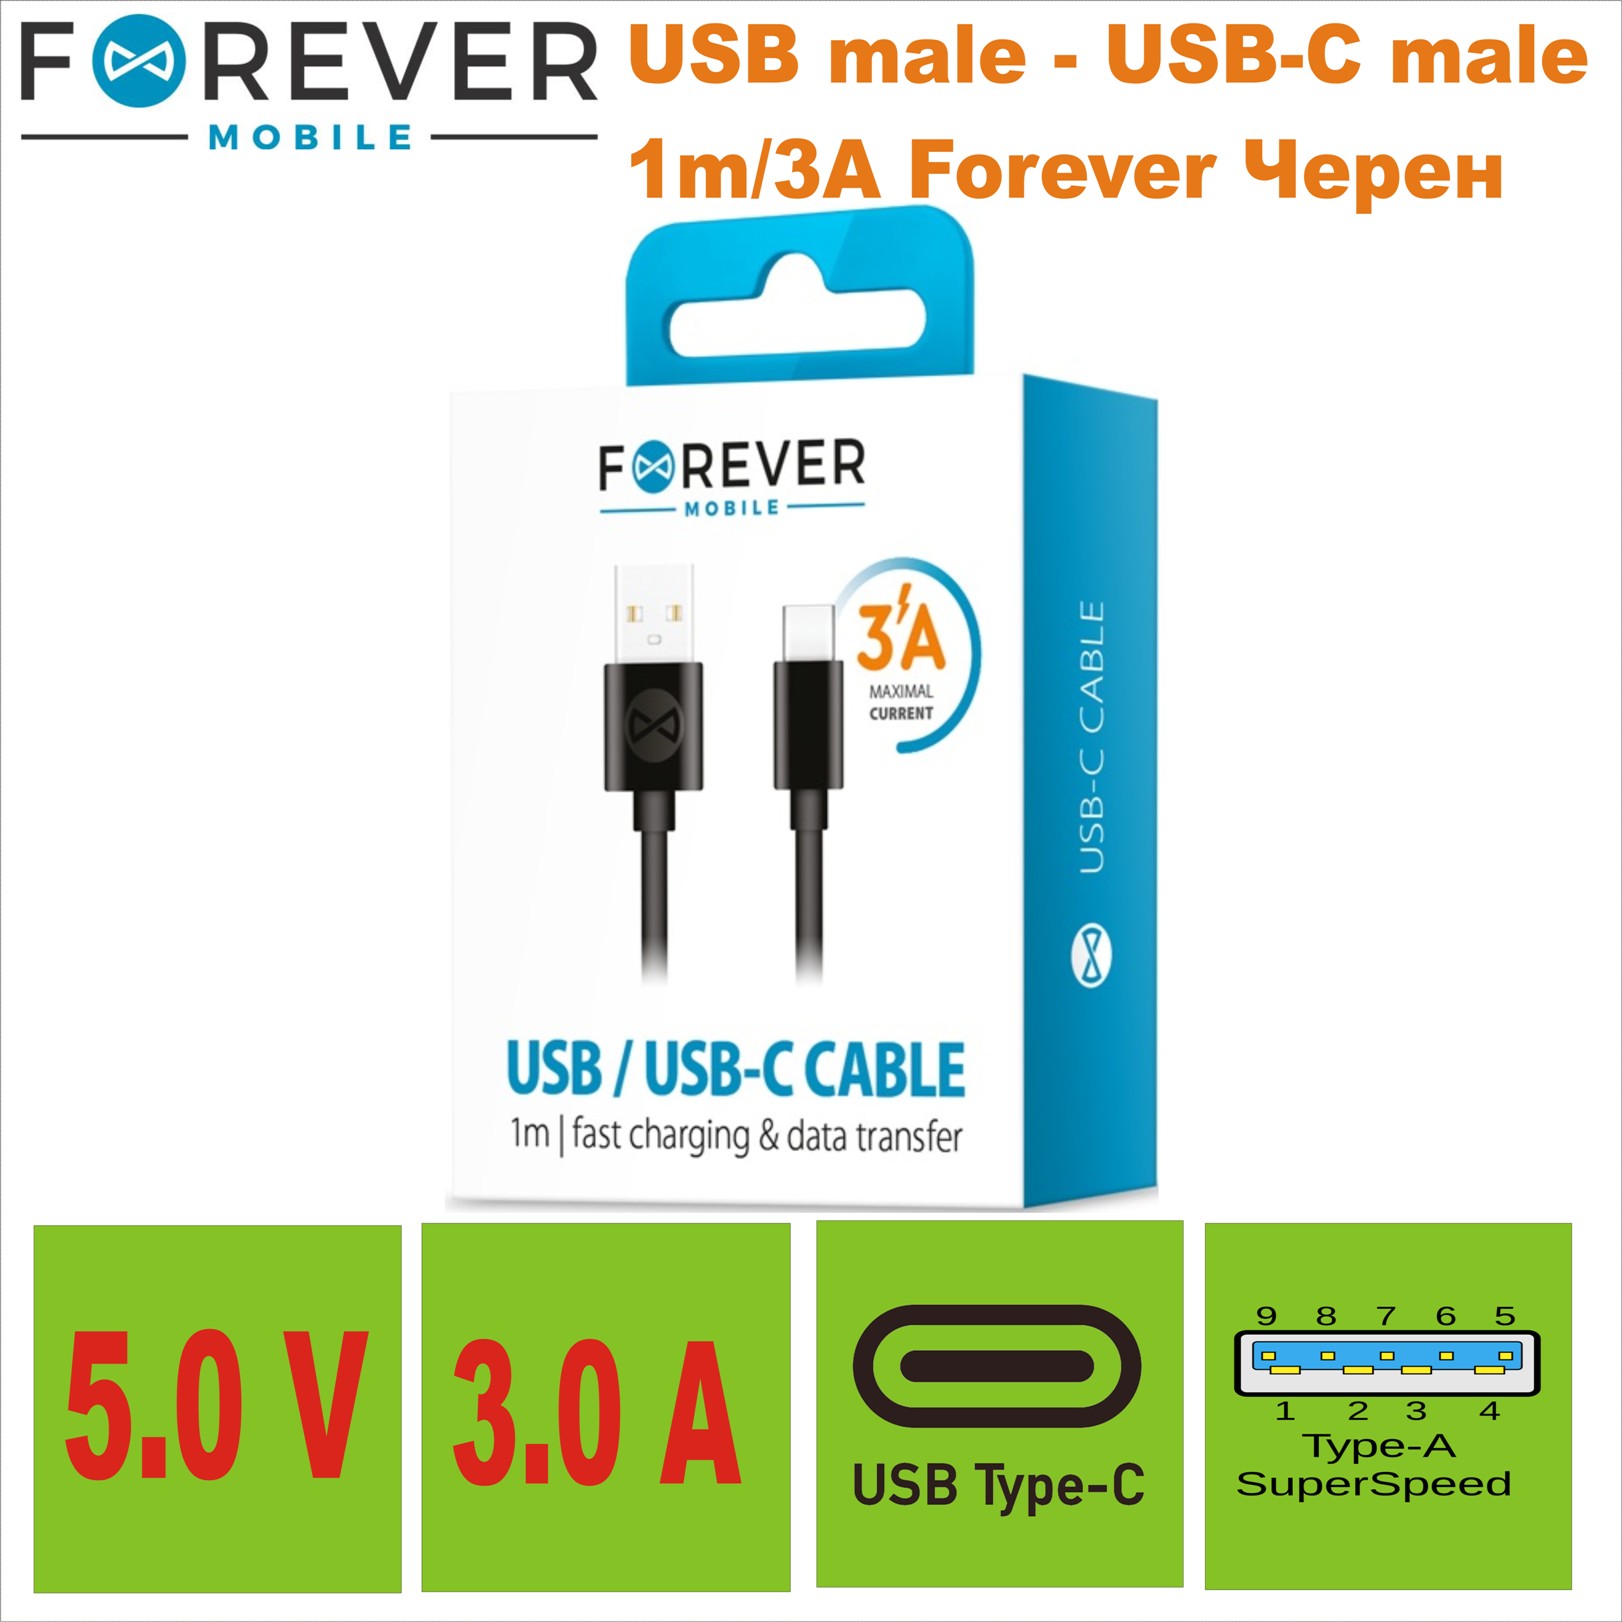 USB male - USB-C male 1m/3A Forever Черен